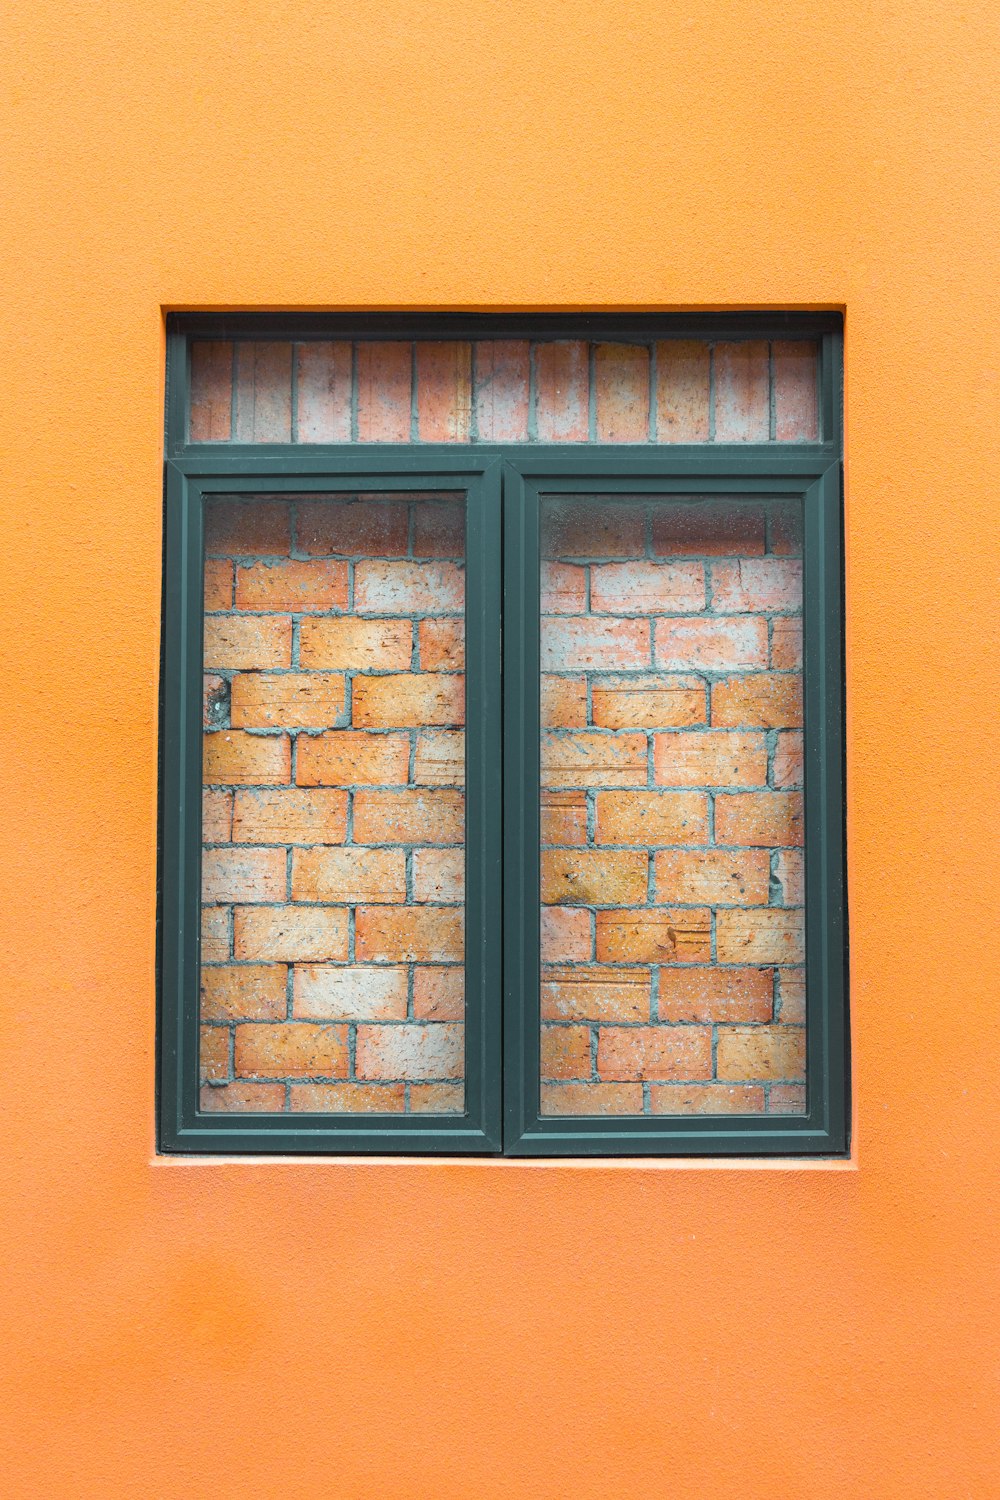 a window in a brick wall